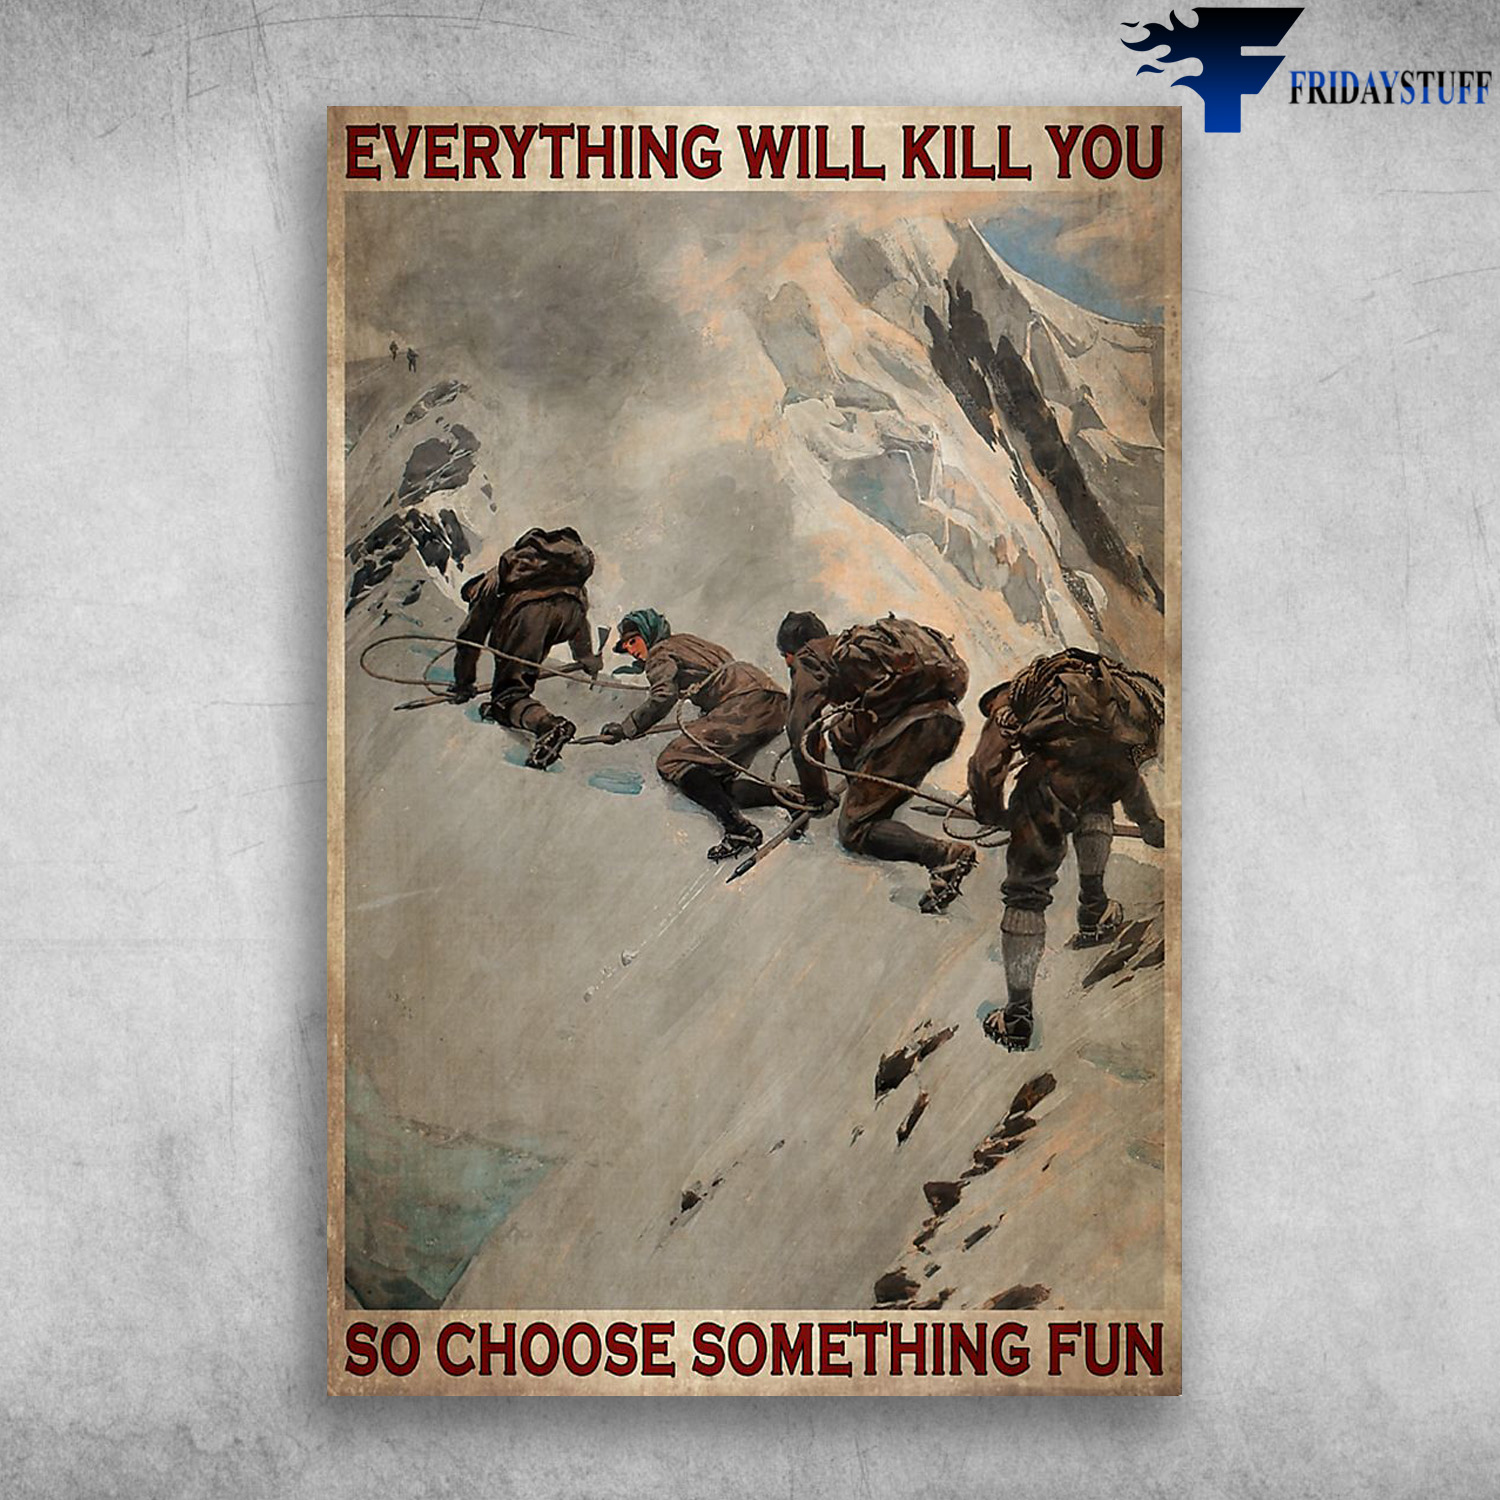 Four Man Climbing On The Snow Mountain - Everything Will Kill You, So Choose Something Fun